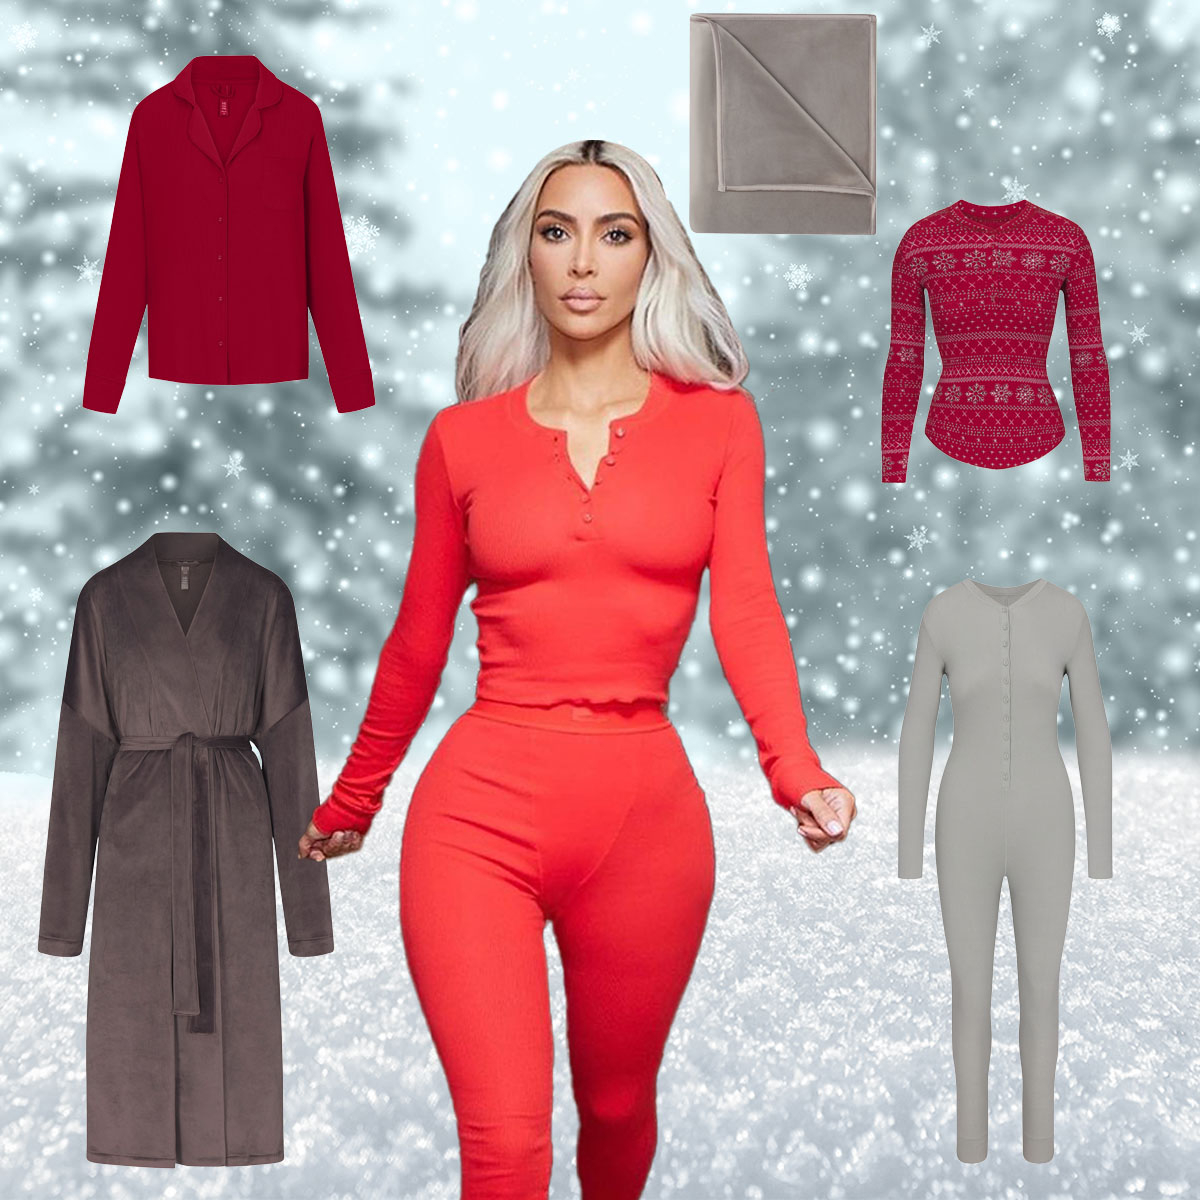 Kim Kardashian's SKIMS Winter Sale Has Major Markdowns on Top-Sellers